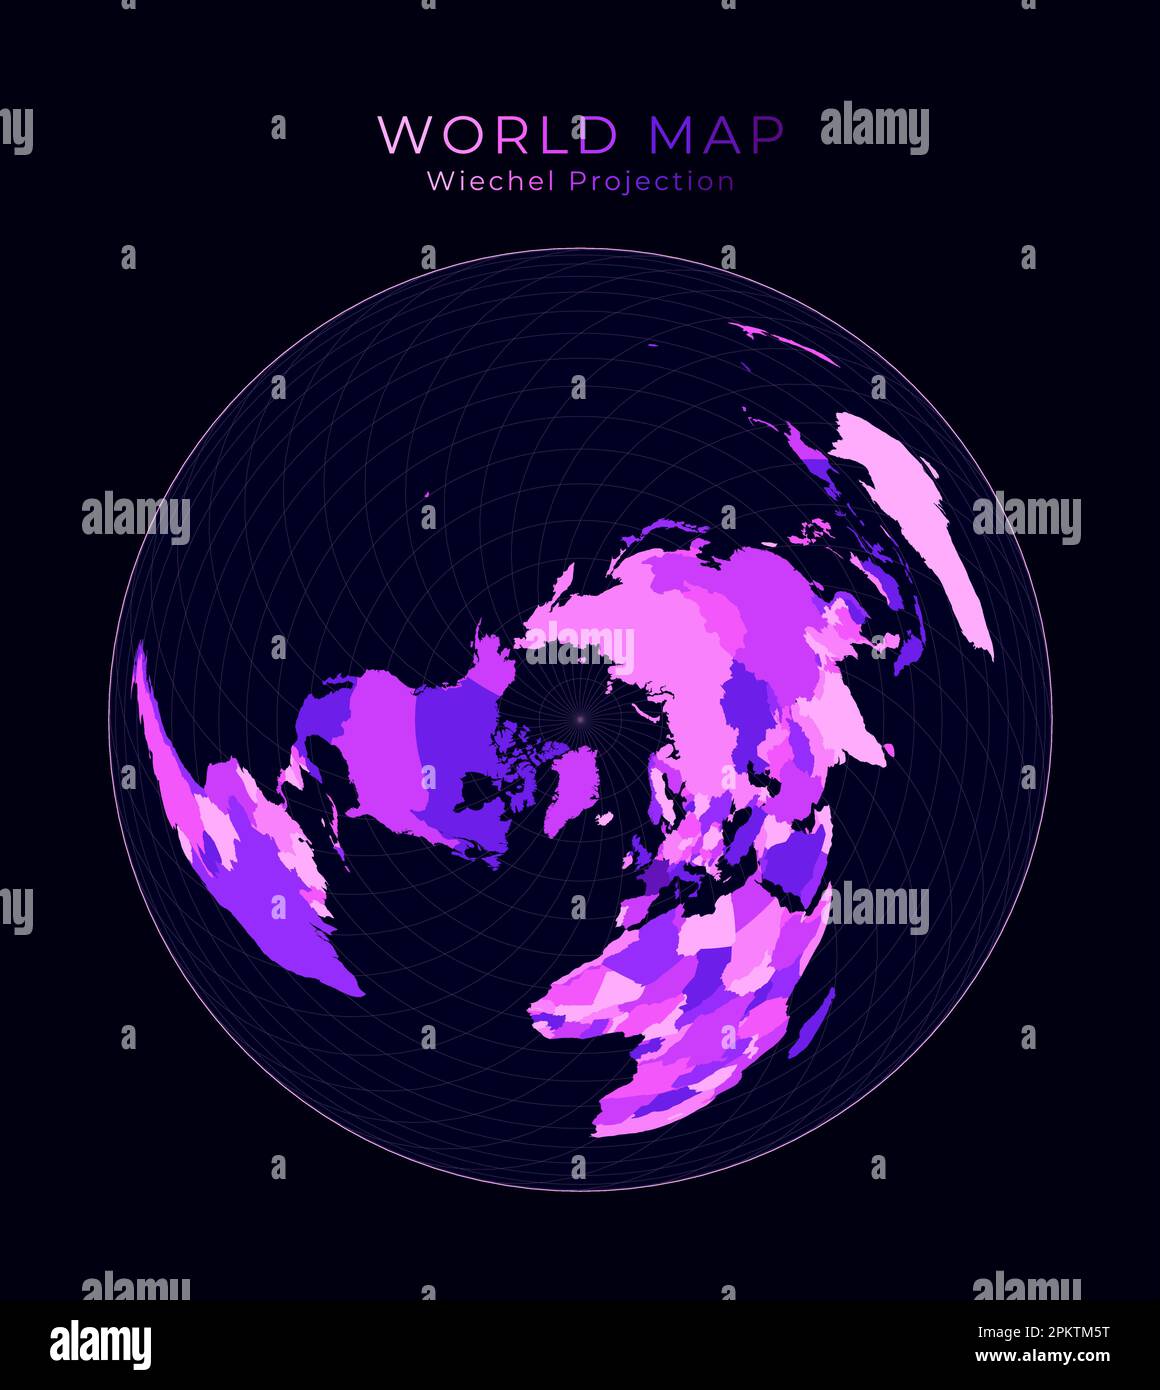 World Map Wiechel Projection Digital World Illustration Bright Pink Neon Colors On Dark 7231